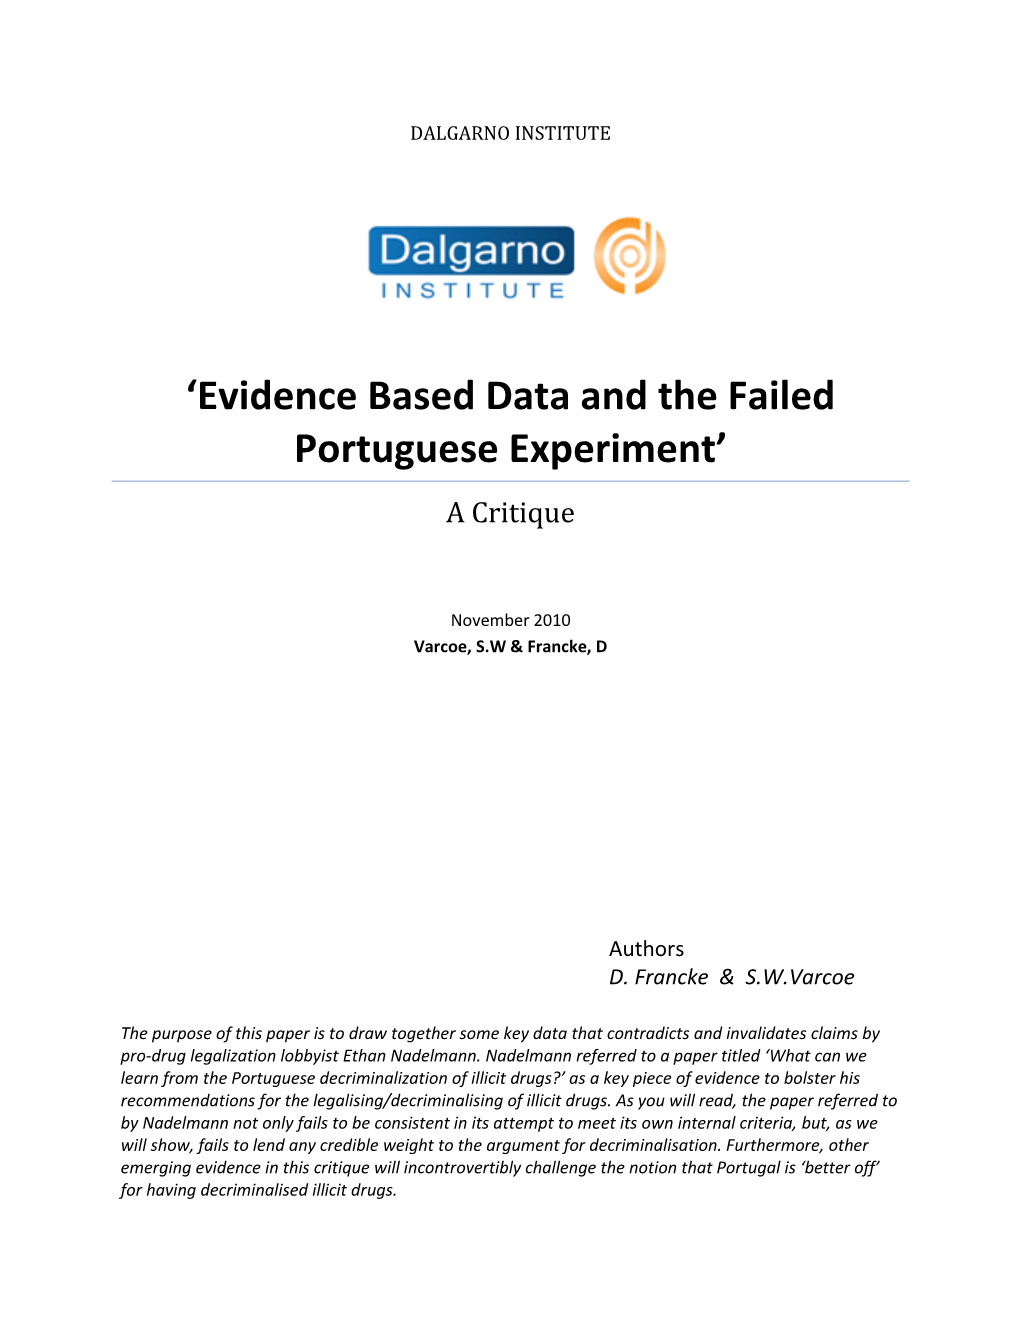 'Evidence Based Data and the Failed Portuguese Experiment'